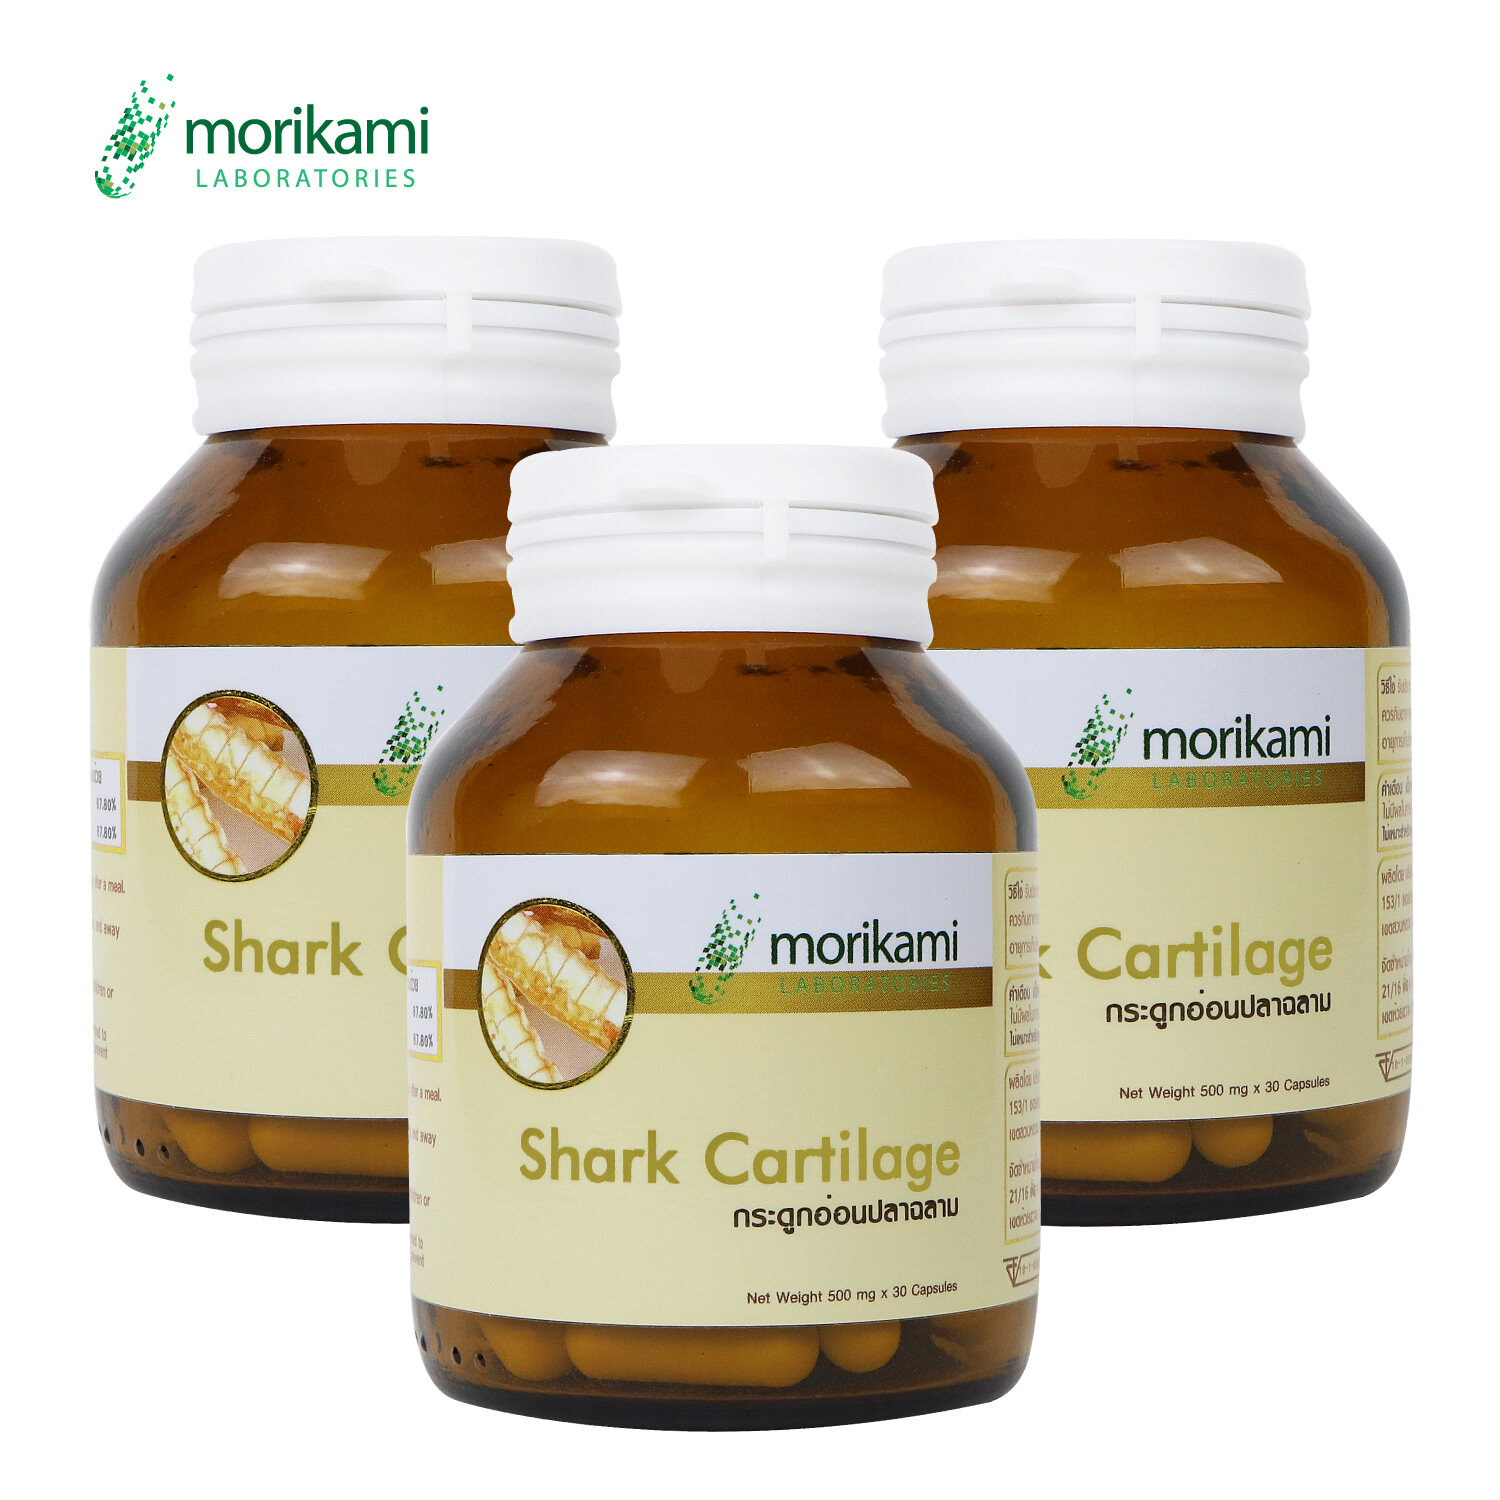 Shark Cartilagex 3 ขวด Morikami Laboratories x 30 Capsules กระดูกอ่อนปลาฉลาม โมริคามิ